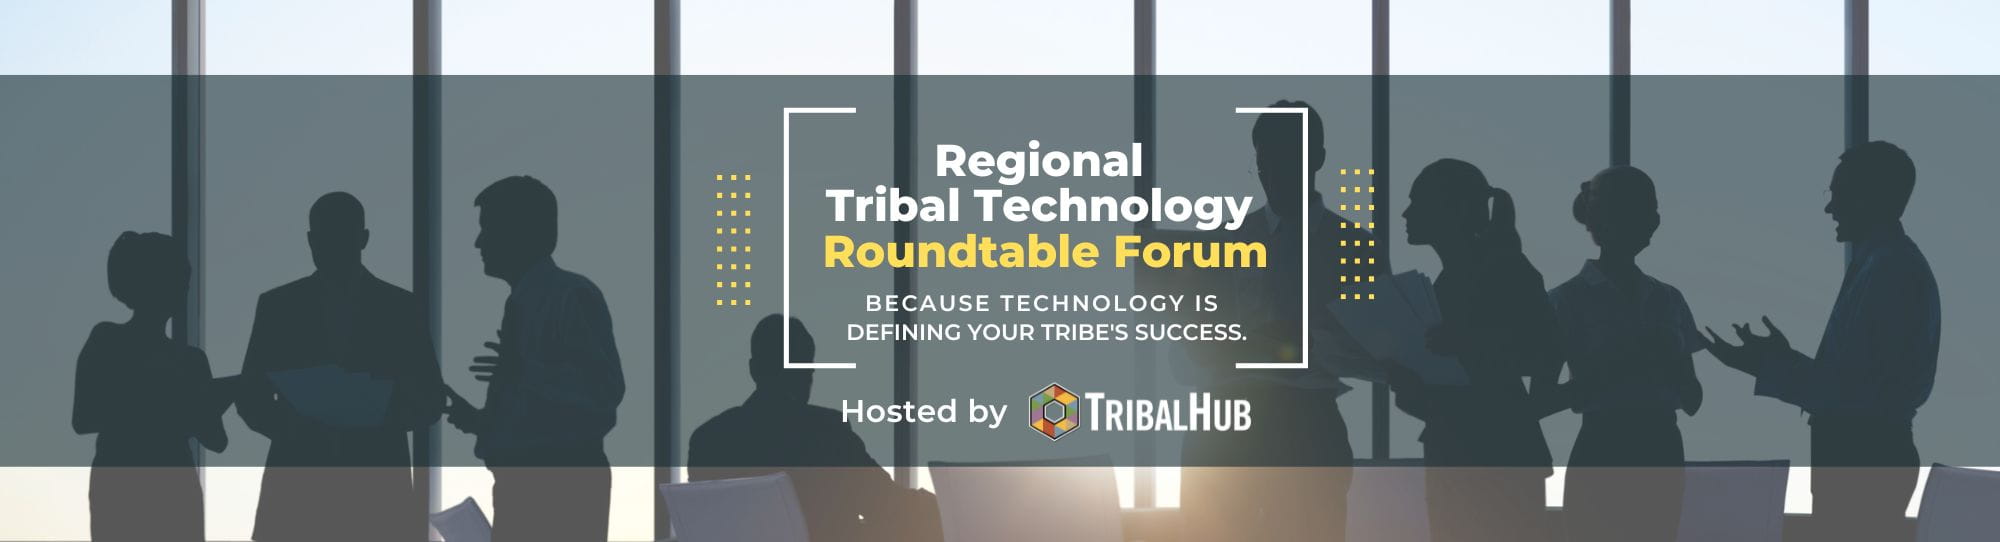 Regional tribal technology roundtable forum